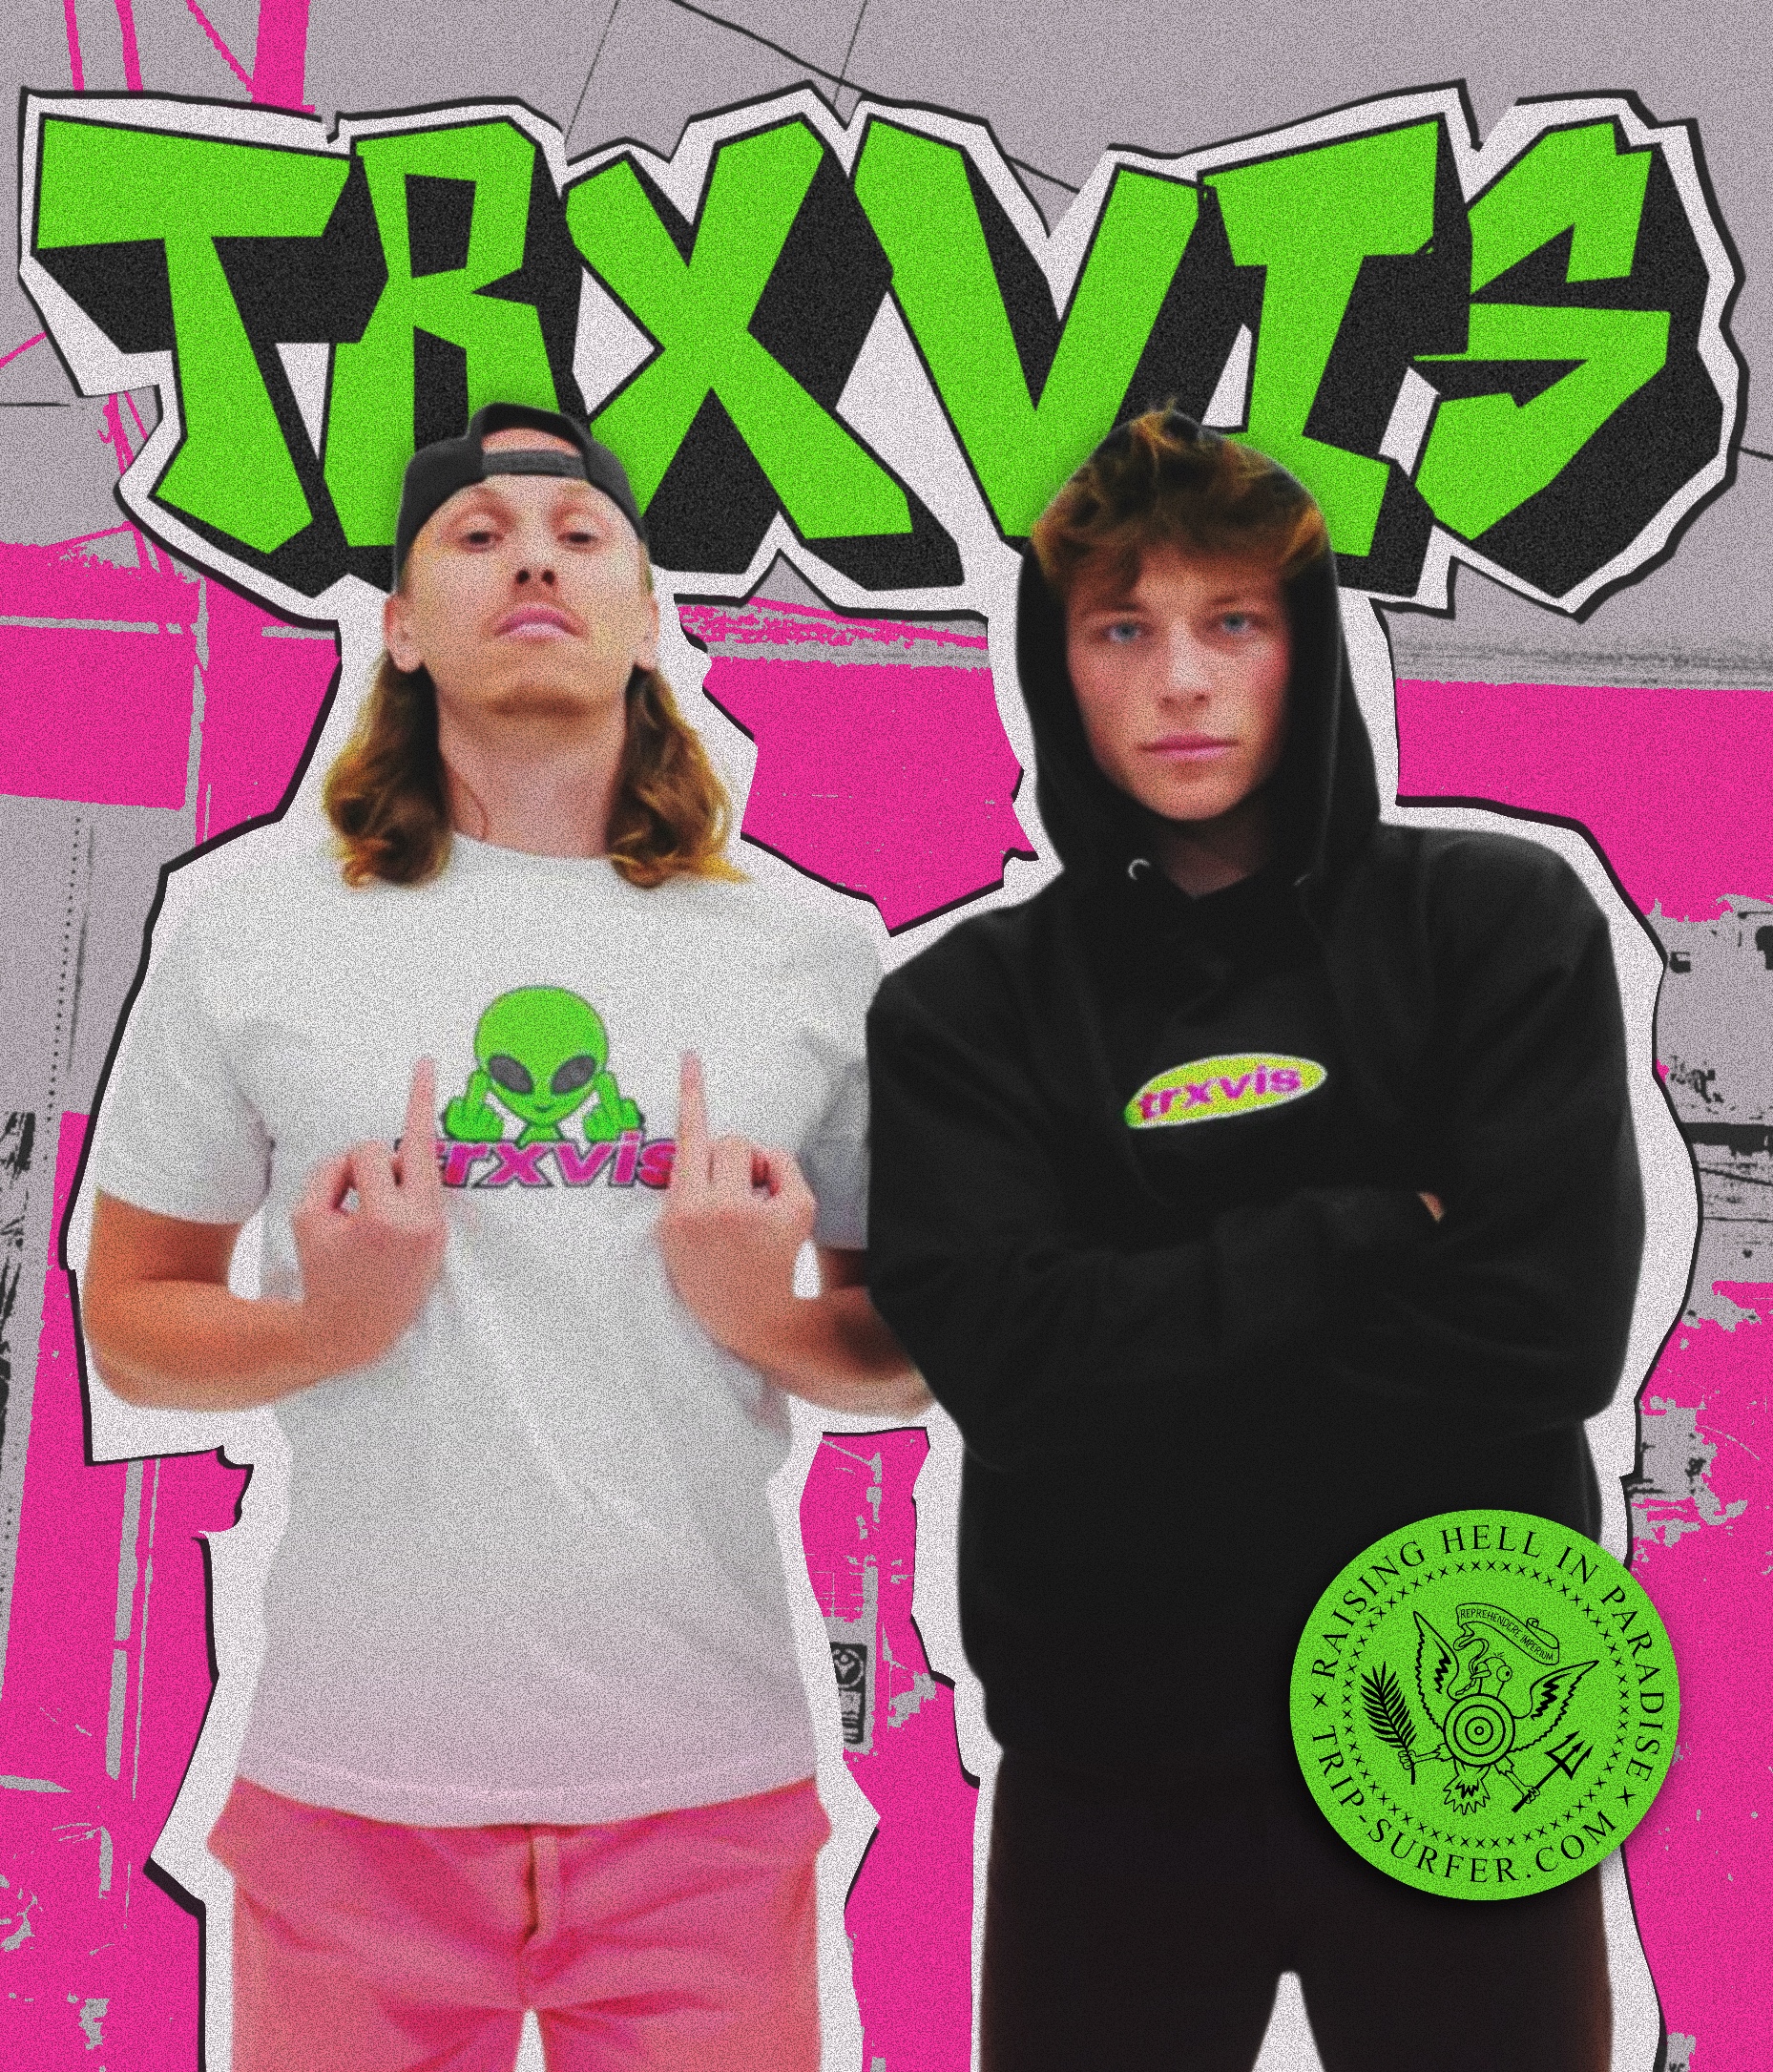 Trxvis-bad-Travis-river-punk-rock-graphic-hoodie